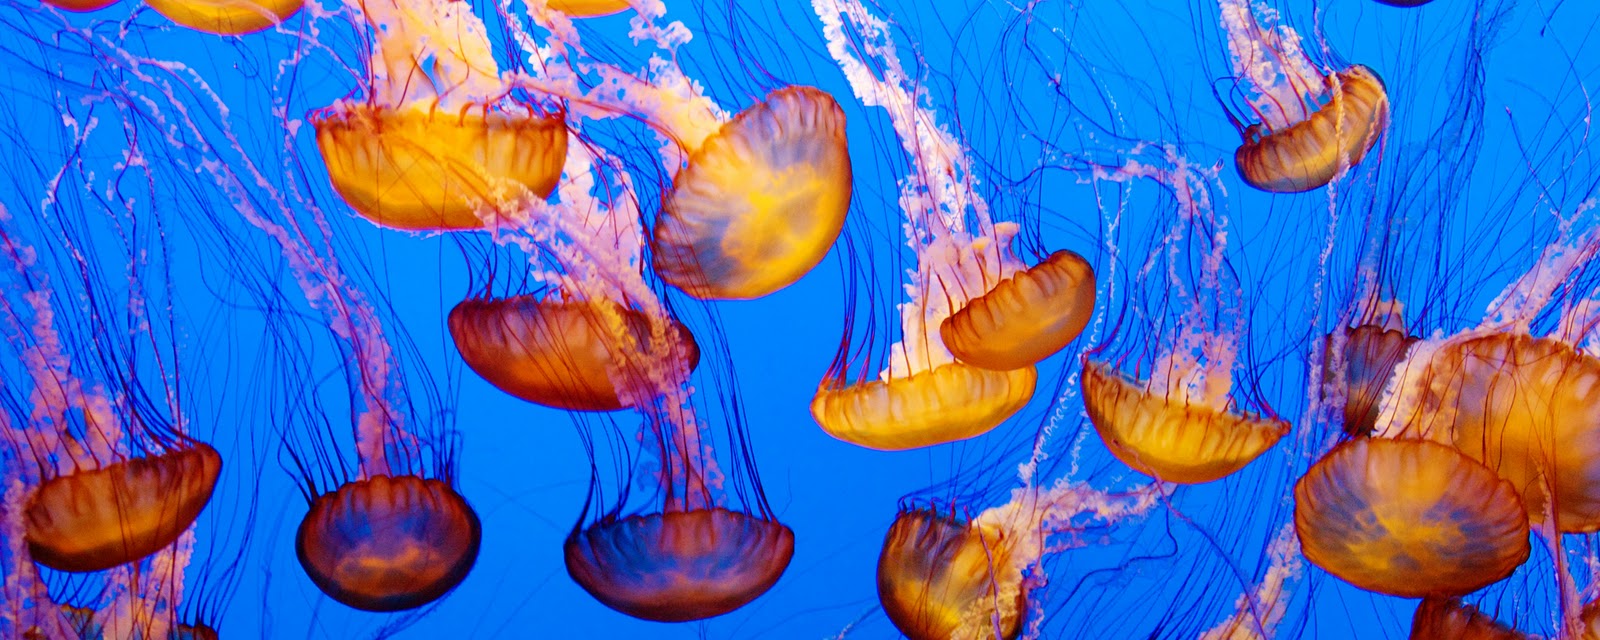 Jellyfishl Jpg